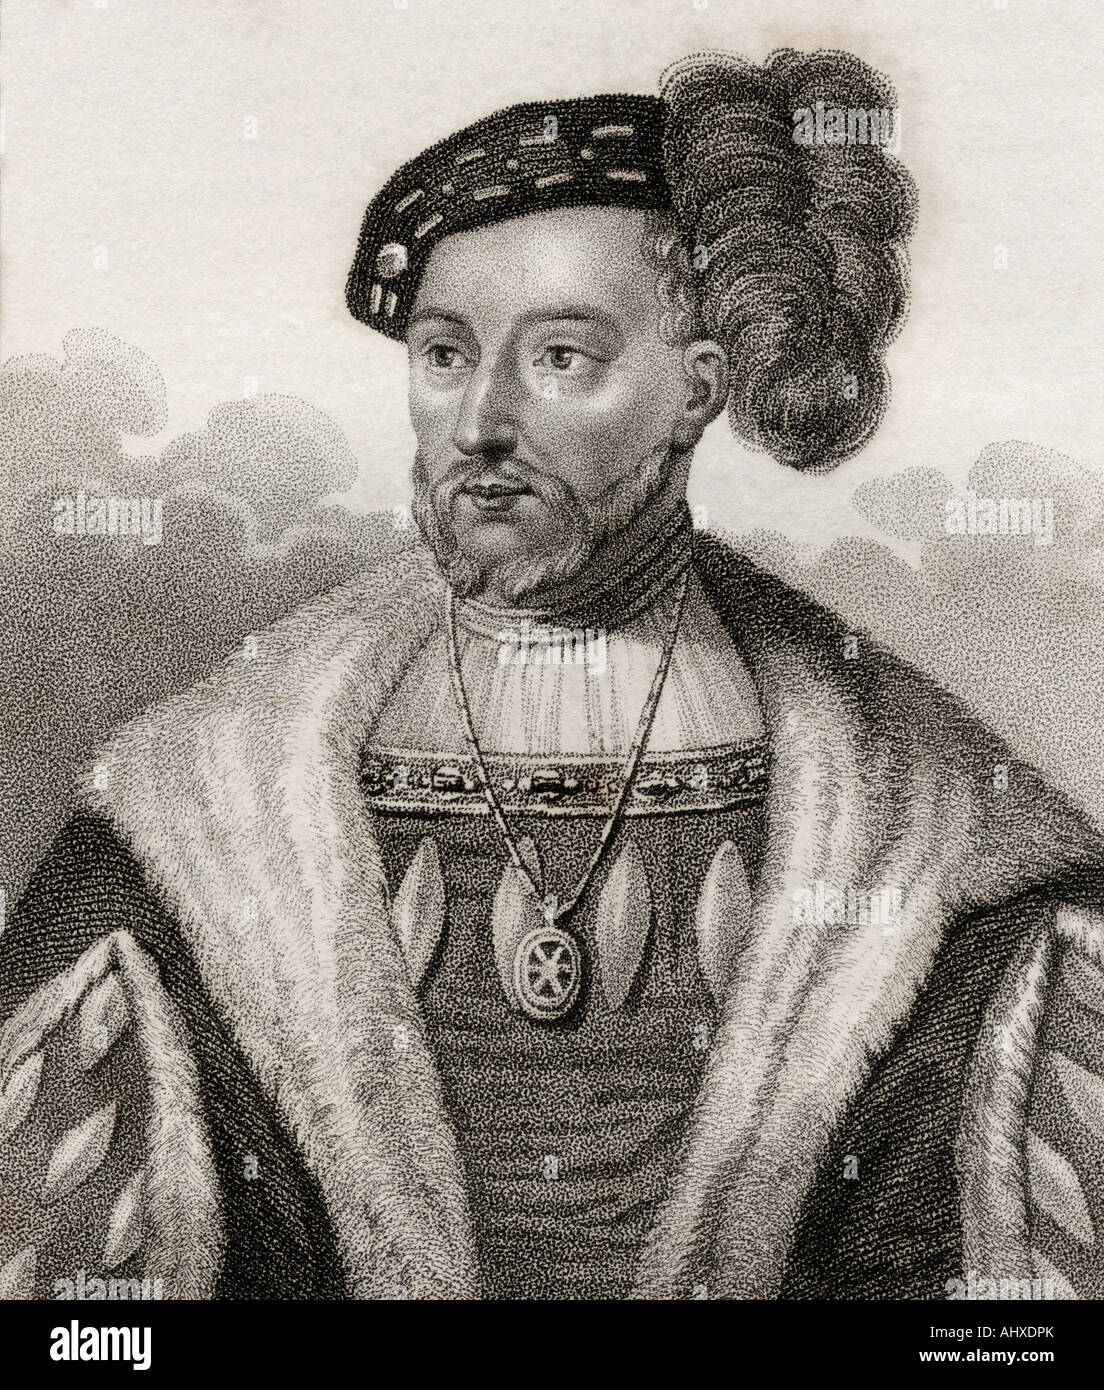 James V, King of Scotland, 1512 - 1542. Stock Photo